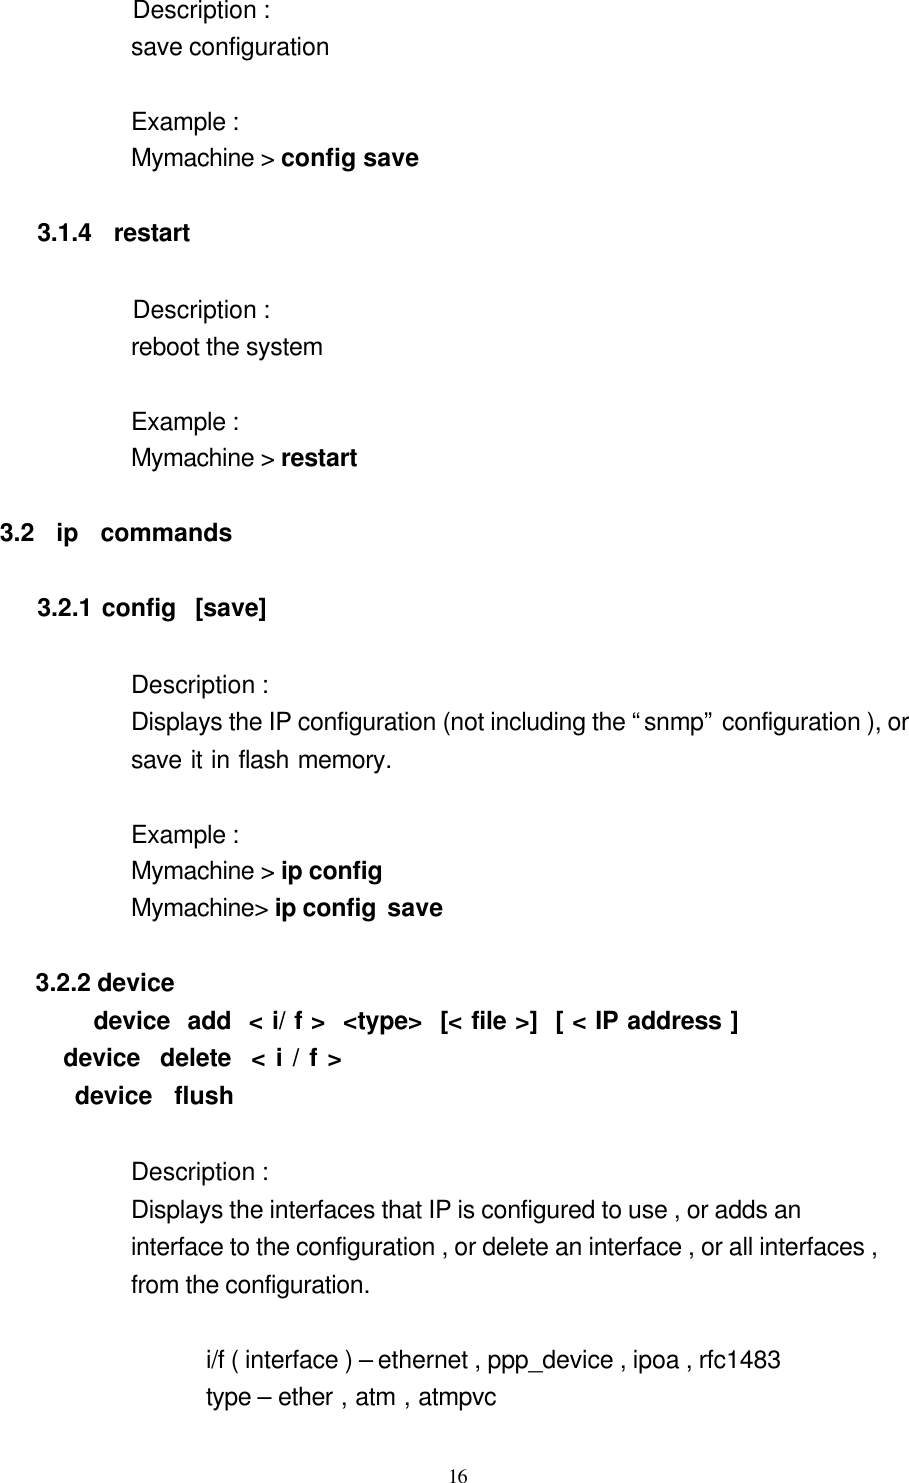  16 Description :   save configuration  Example :   Mymachine &gt; config save             3.1.4  restart            Description :   reboot the system            Example :   Mymachine &gt; restart  3.2  ip  commands  3.2.1 config  [save]                   Description :   Displays the IP configuration (not including the “snmp” configuration ), or   save it in flash memory.     Example : Mymachine &gt; ip config         Mymachine&gt; ip config save        3.2.2 device device  add  &lt; i/ f &gt;  &lt;type&gt;  [&lt; file &gt;]  [ &lt; IP address ]             device  delete  &lt; i / f &gt;             device  flush    Description :   Displays the interfaces that IP is configured to use , or adds an   interface to the configuration , or delete an interface , or all interfaces ,   from the configuration.  i/f ( interface ) – ethernet , ppp_device , ipoa , rfc1483 type – ether , atm , atmpvc   